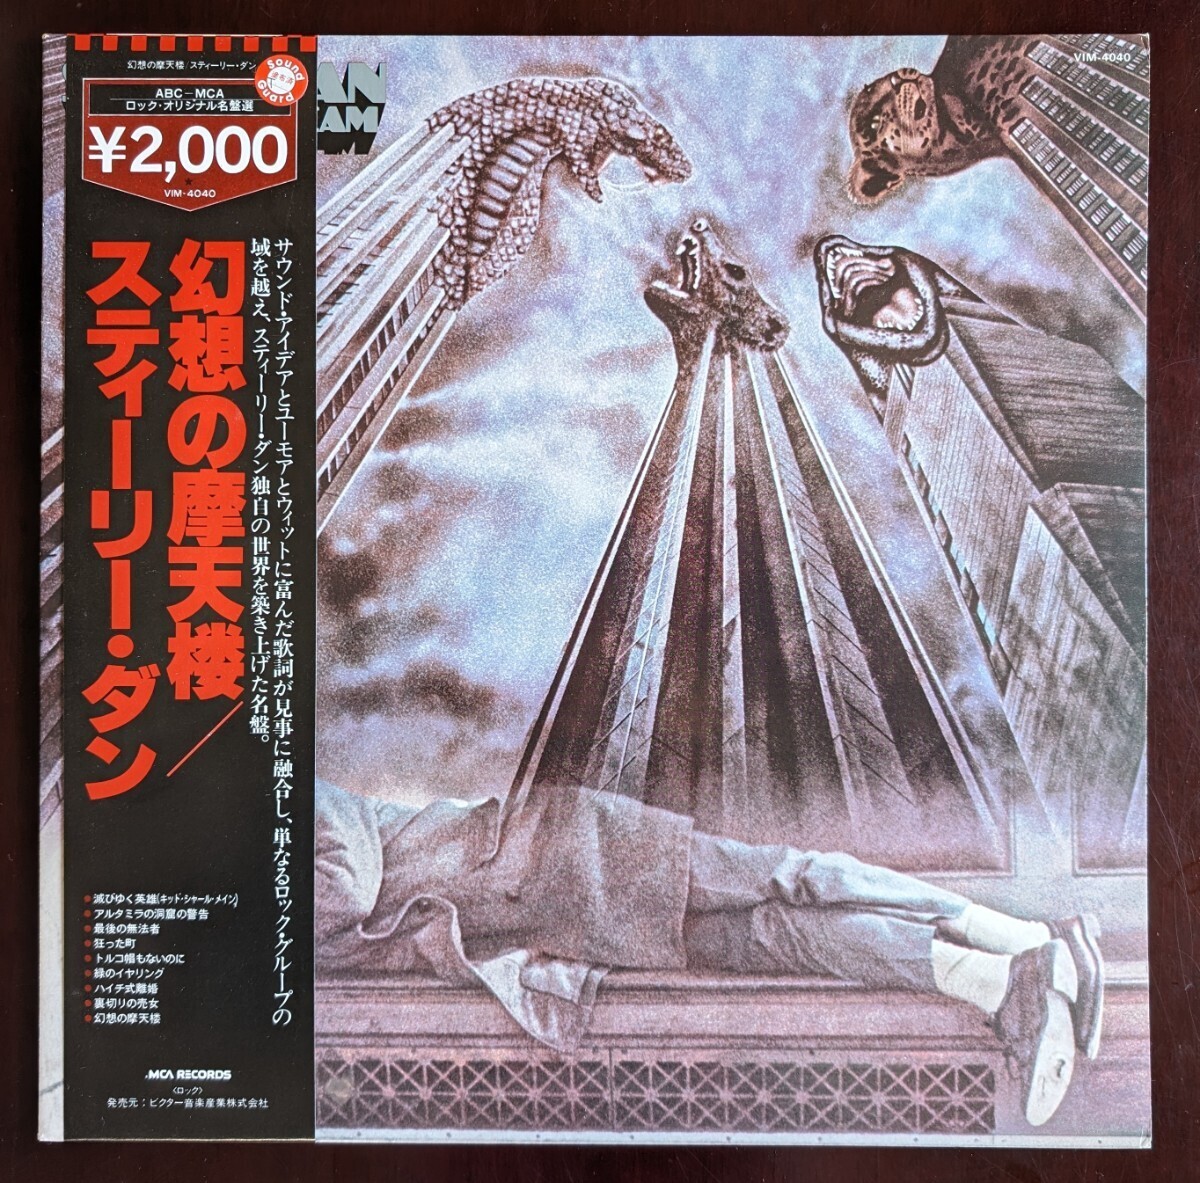 Steely Dan スティーリー・ダン / The Royal Scam 幻想の摩天楼 国内盤 LP 帯付き (1980年・VIM-4040)の画像1